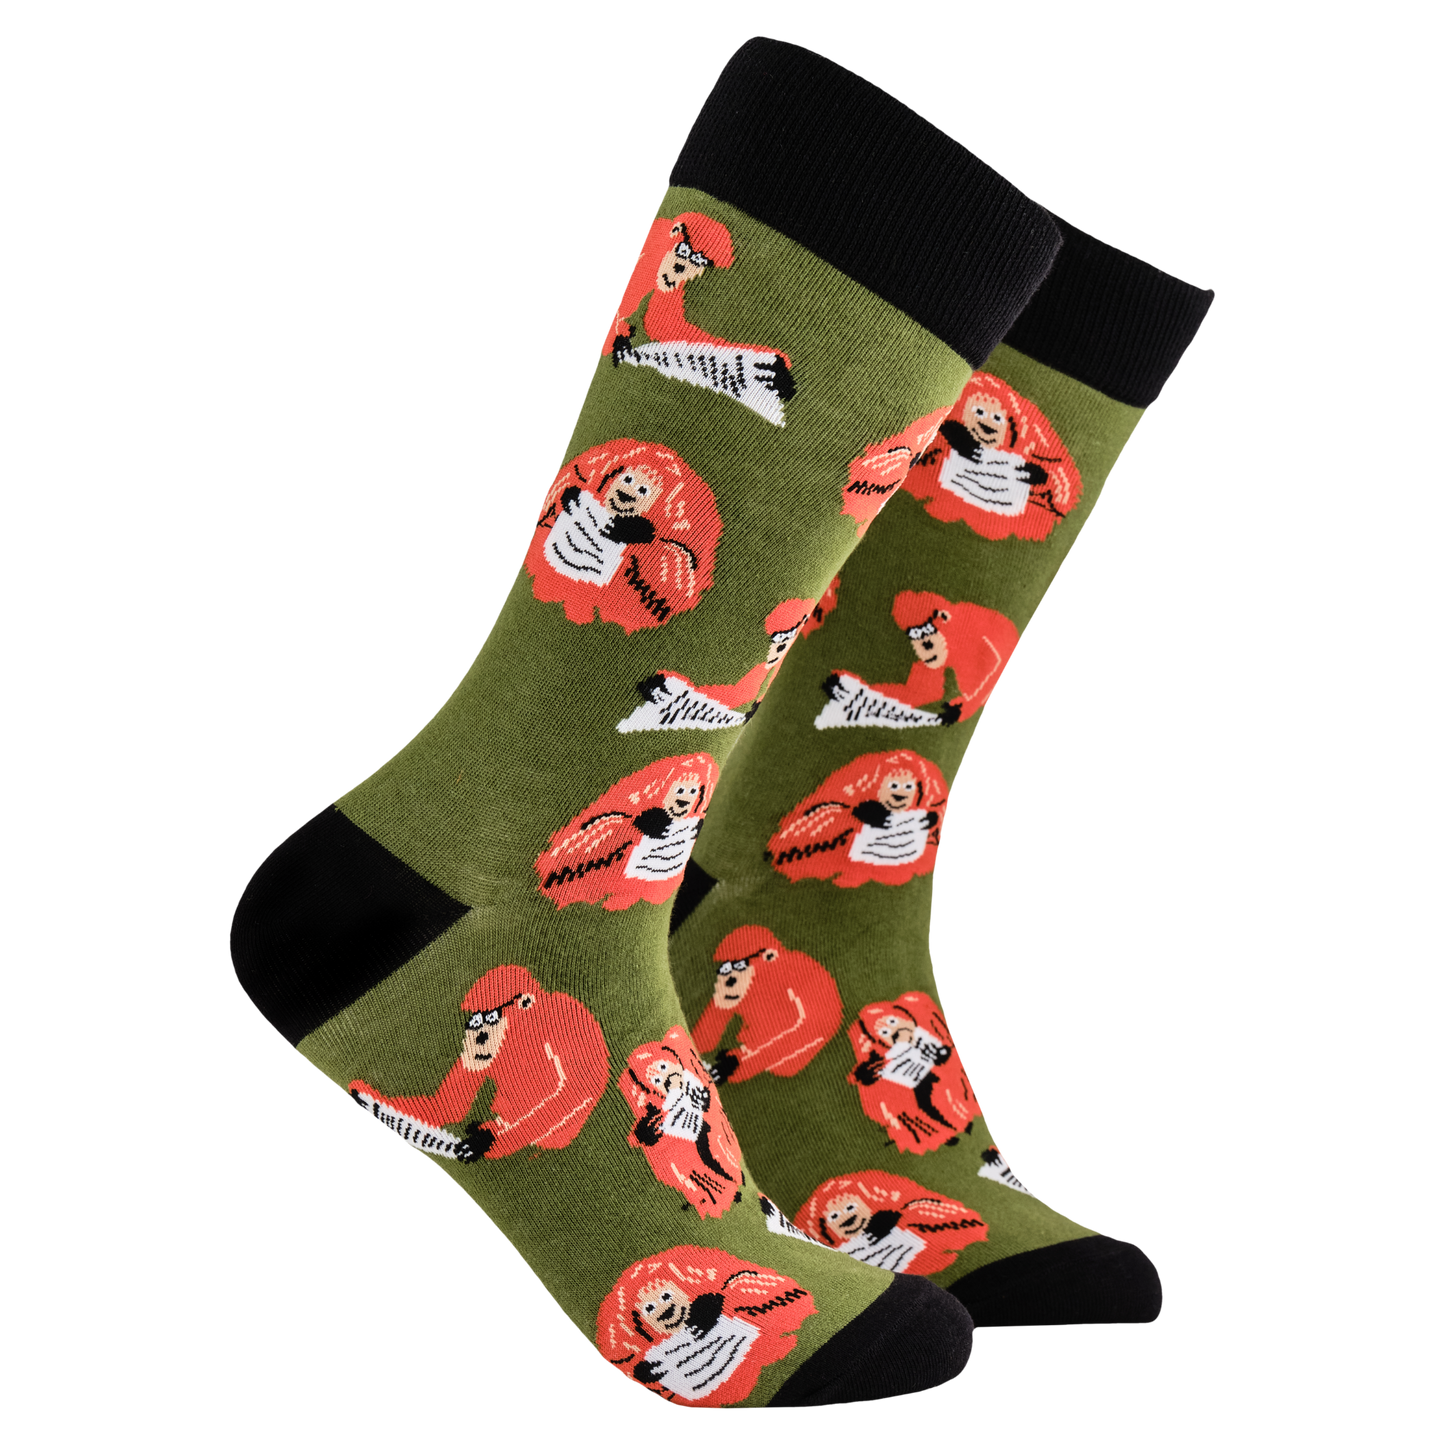 Orangutan IQ Socks. A pair of socks depicting clever Orangutans. Green legs, black cuff, heel and toe.